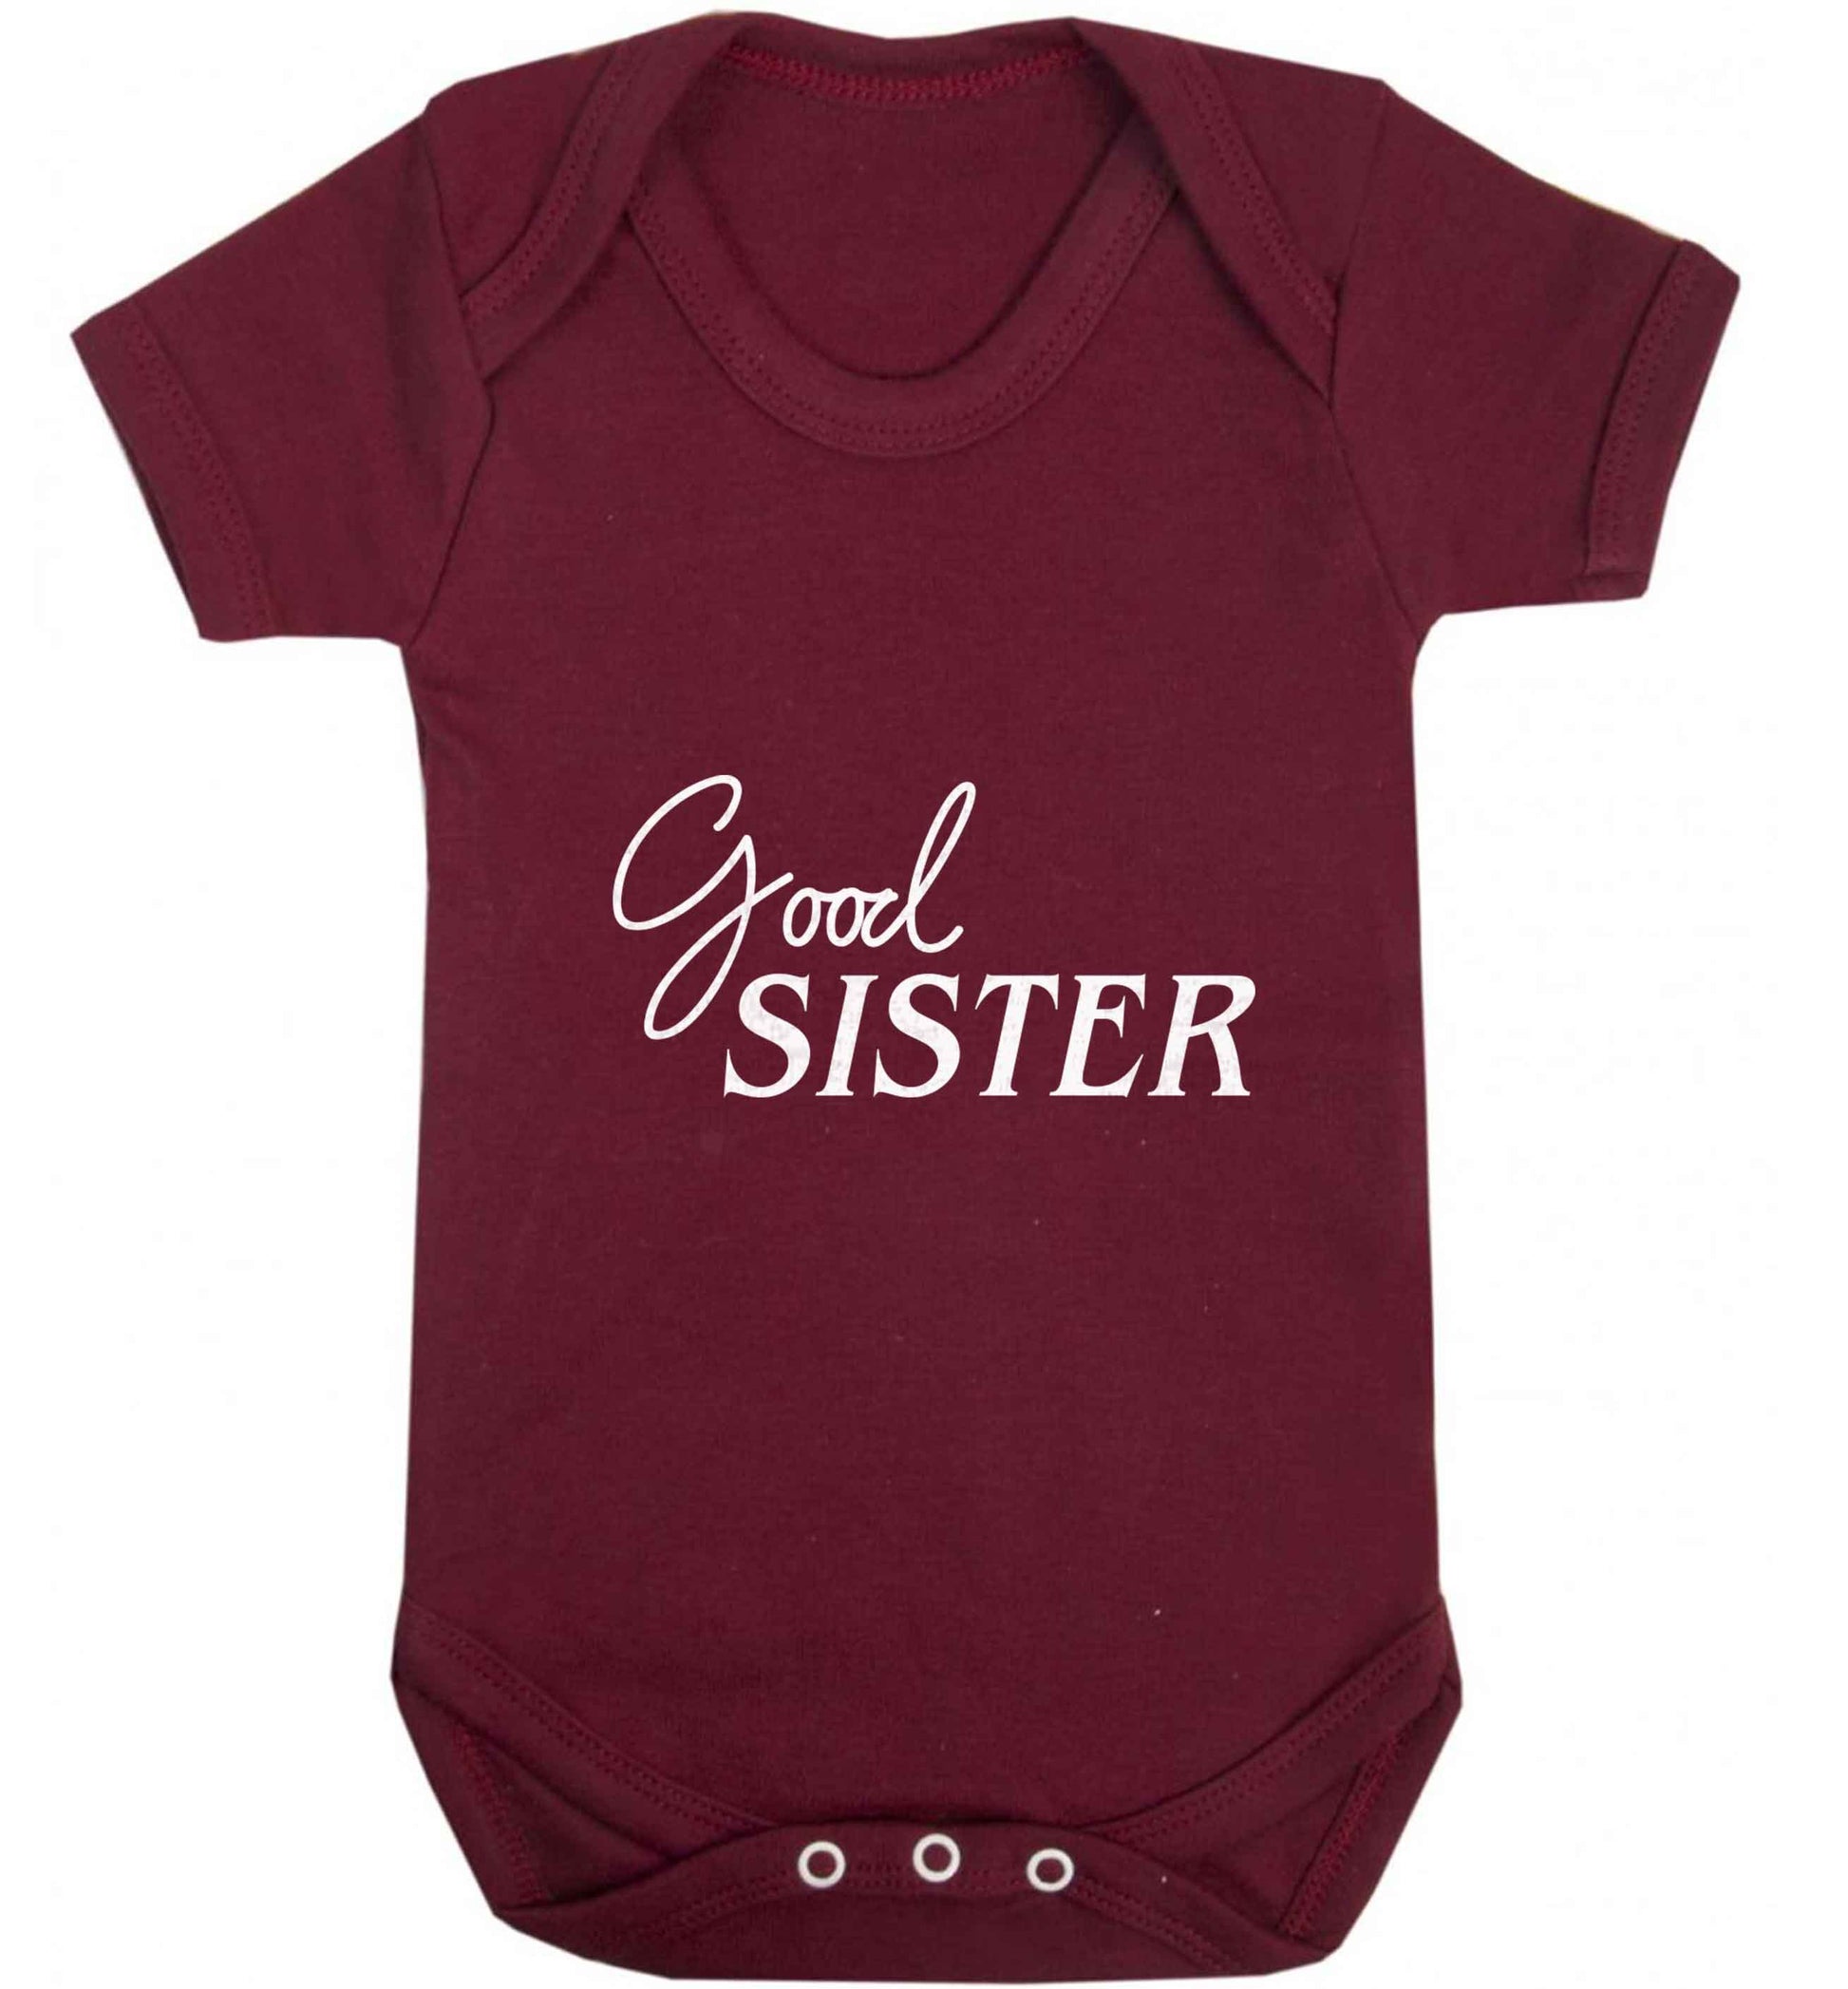 Good sister baby vest maroon 18-24 months